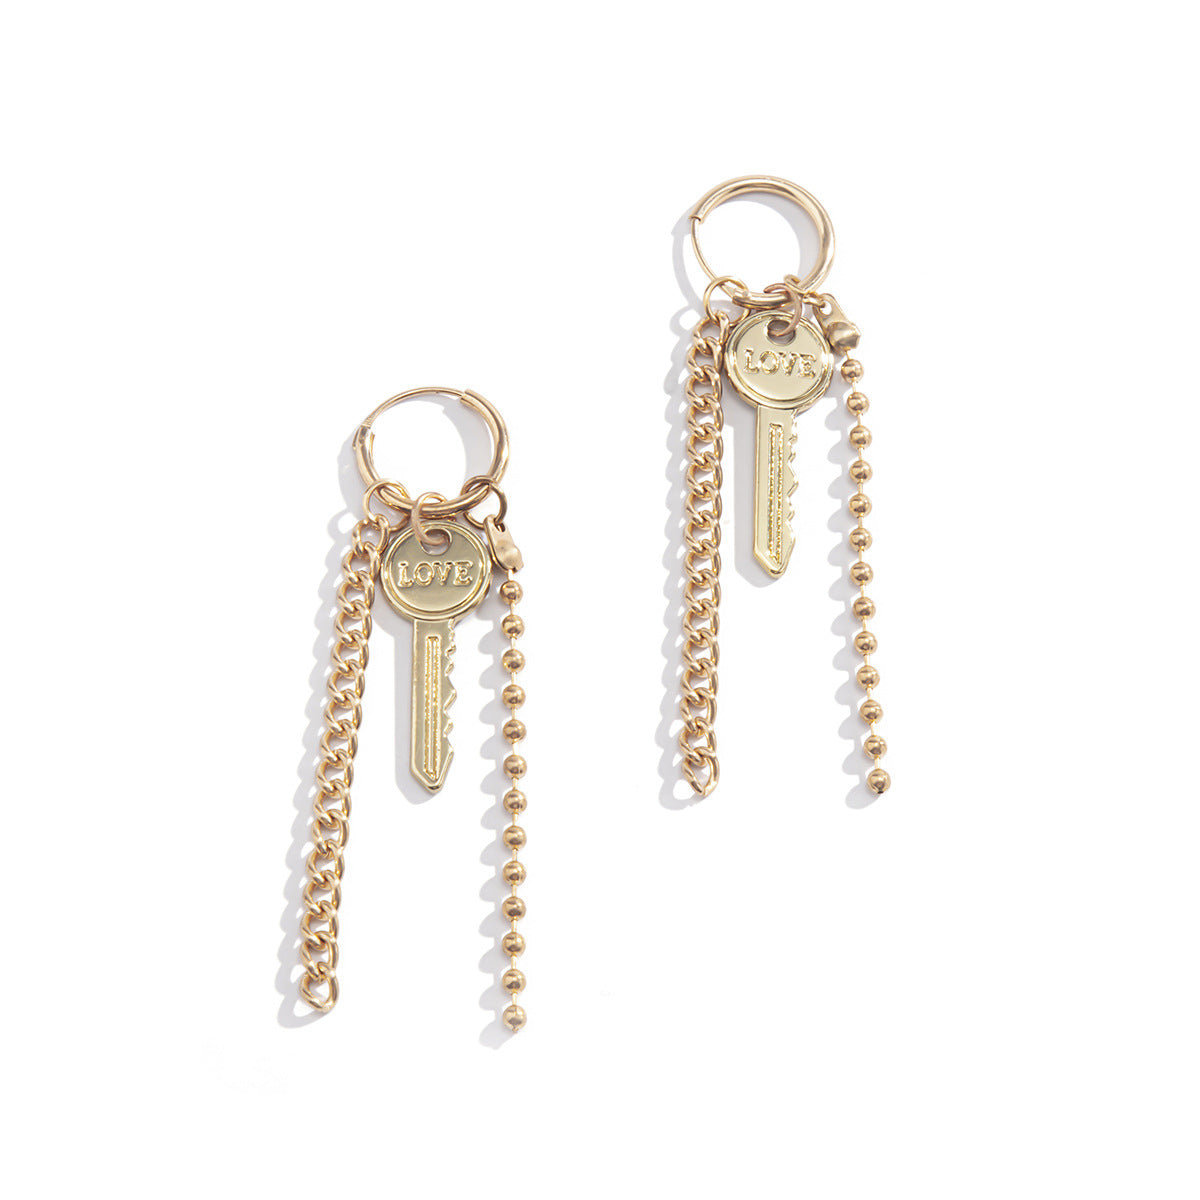 Retro Geometric Handmade Letter Earrings with Multiple Keys, Bead Chains, and Tassels for Women